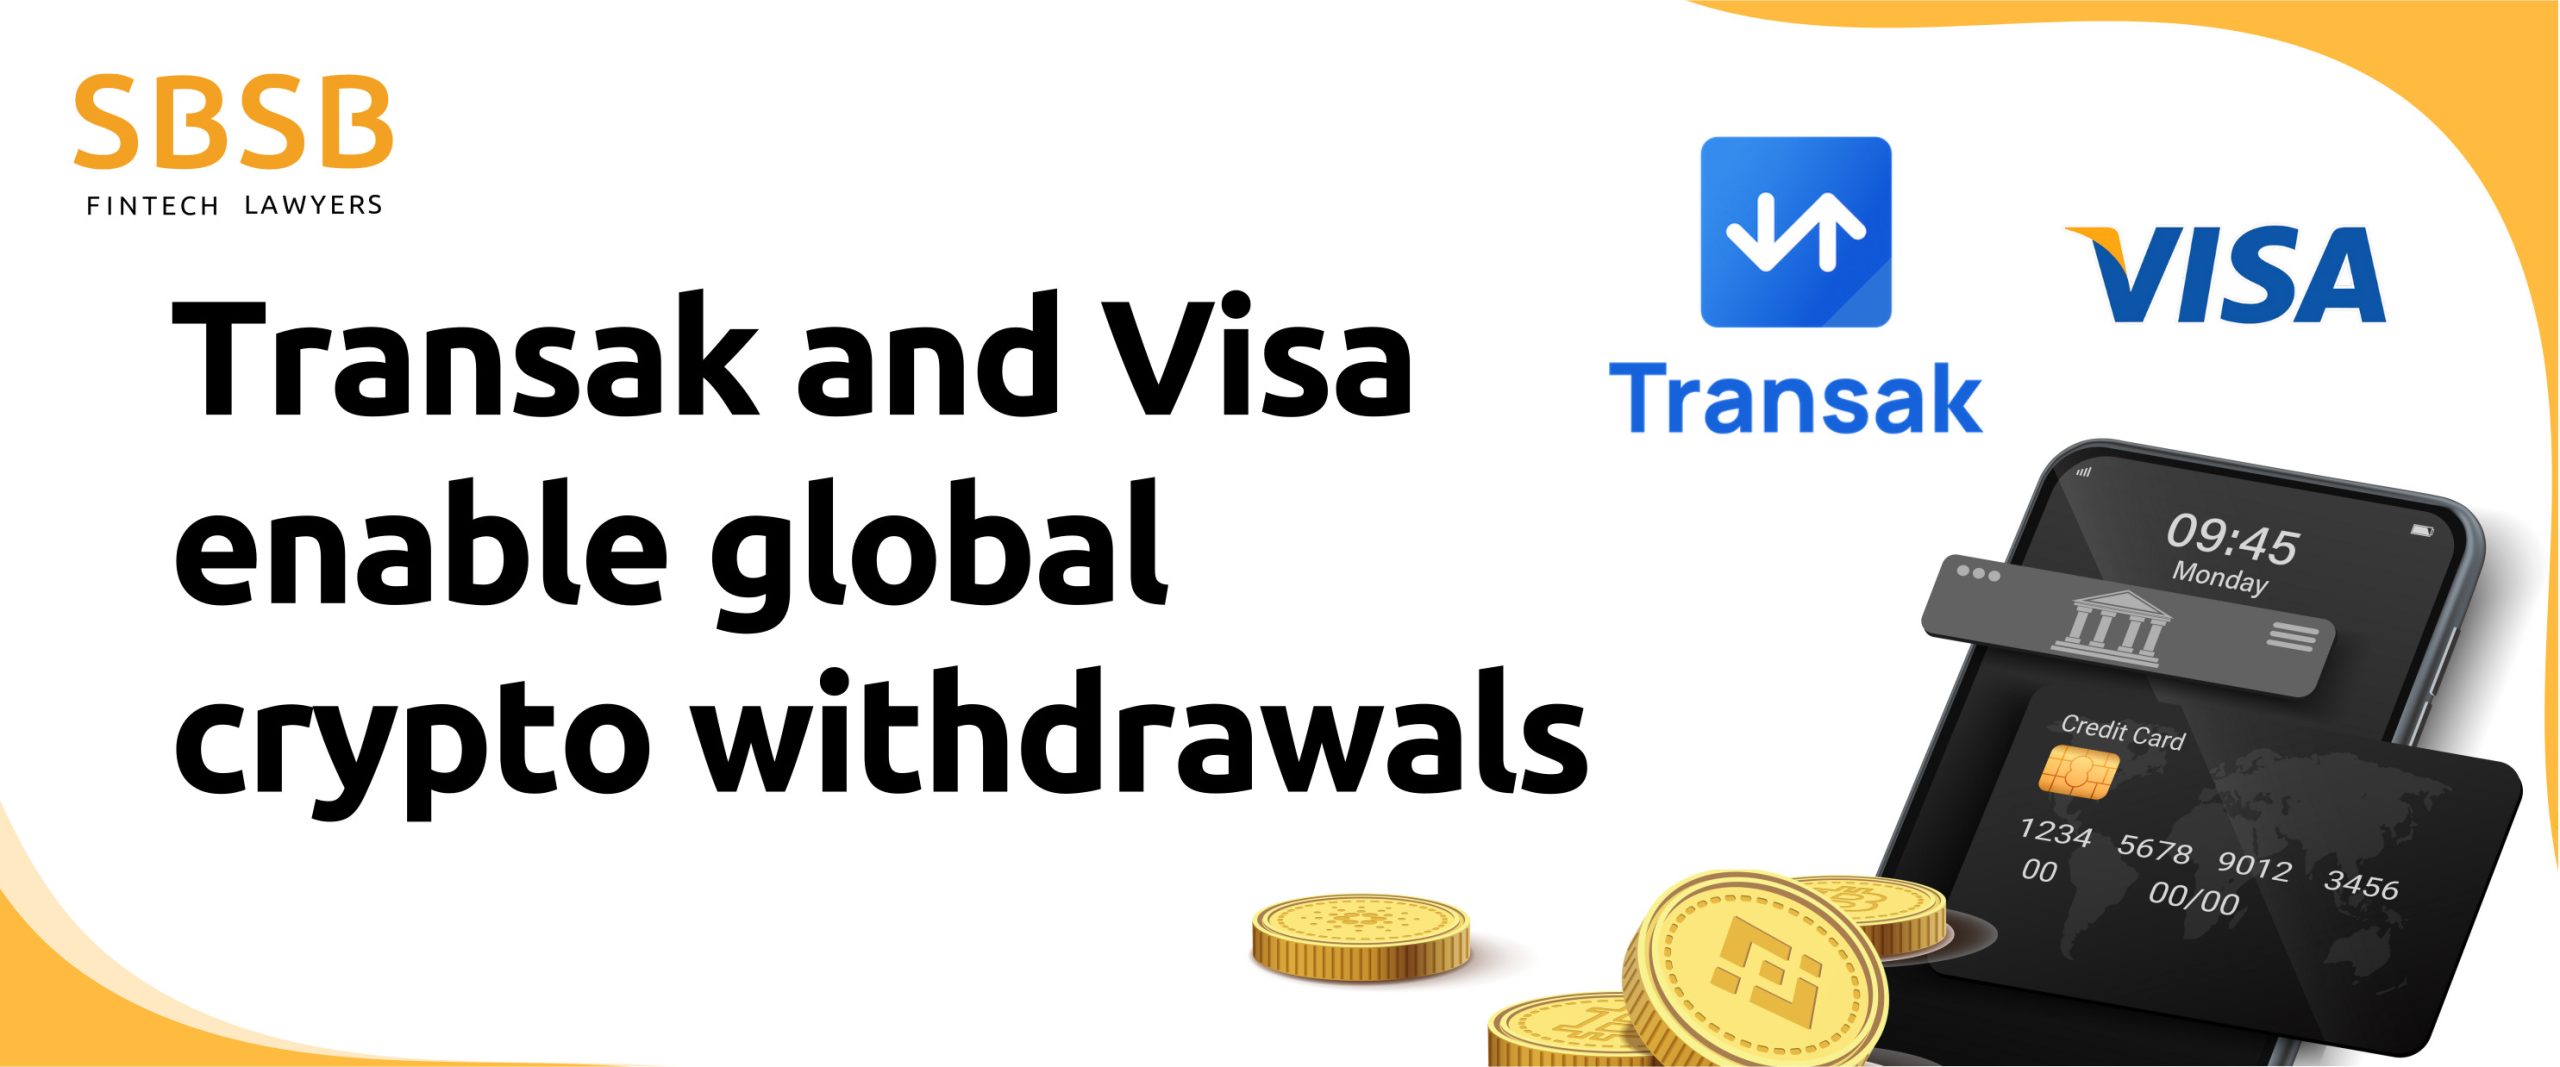 Transak and Visa enable global crypto withdrawals